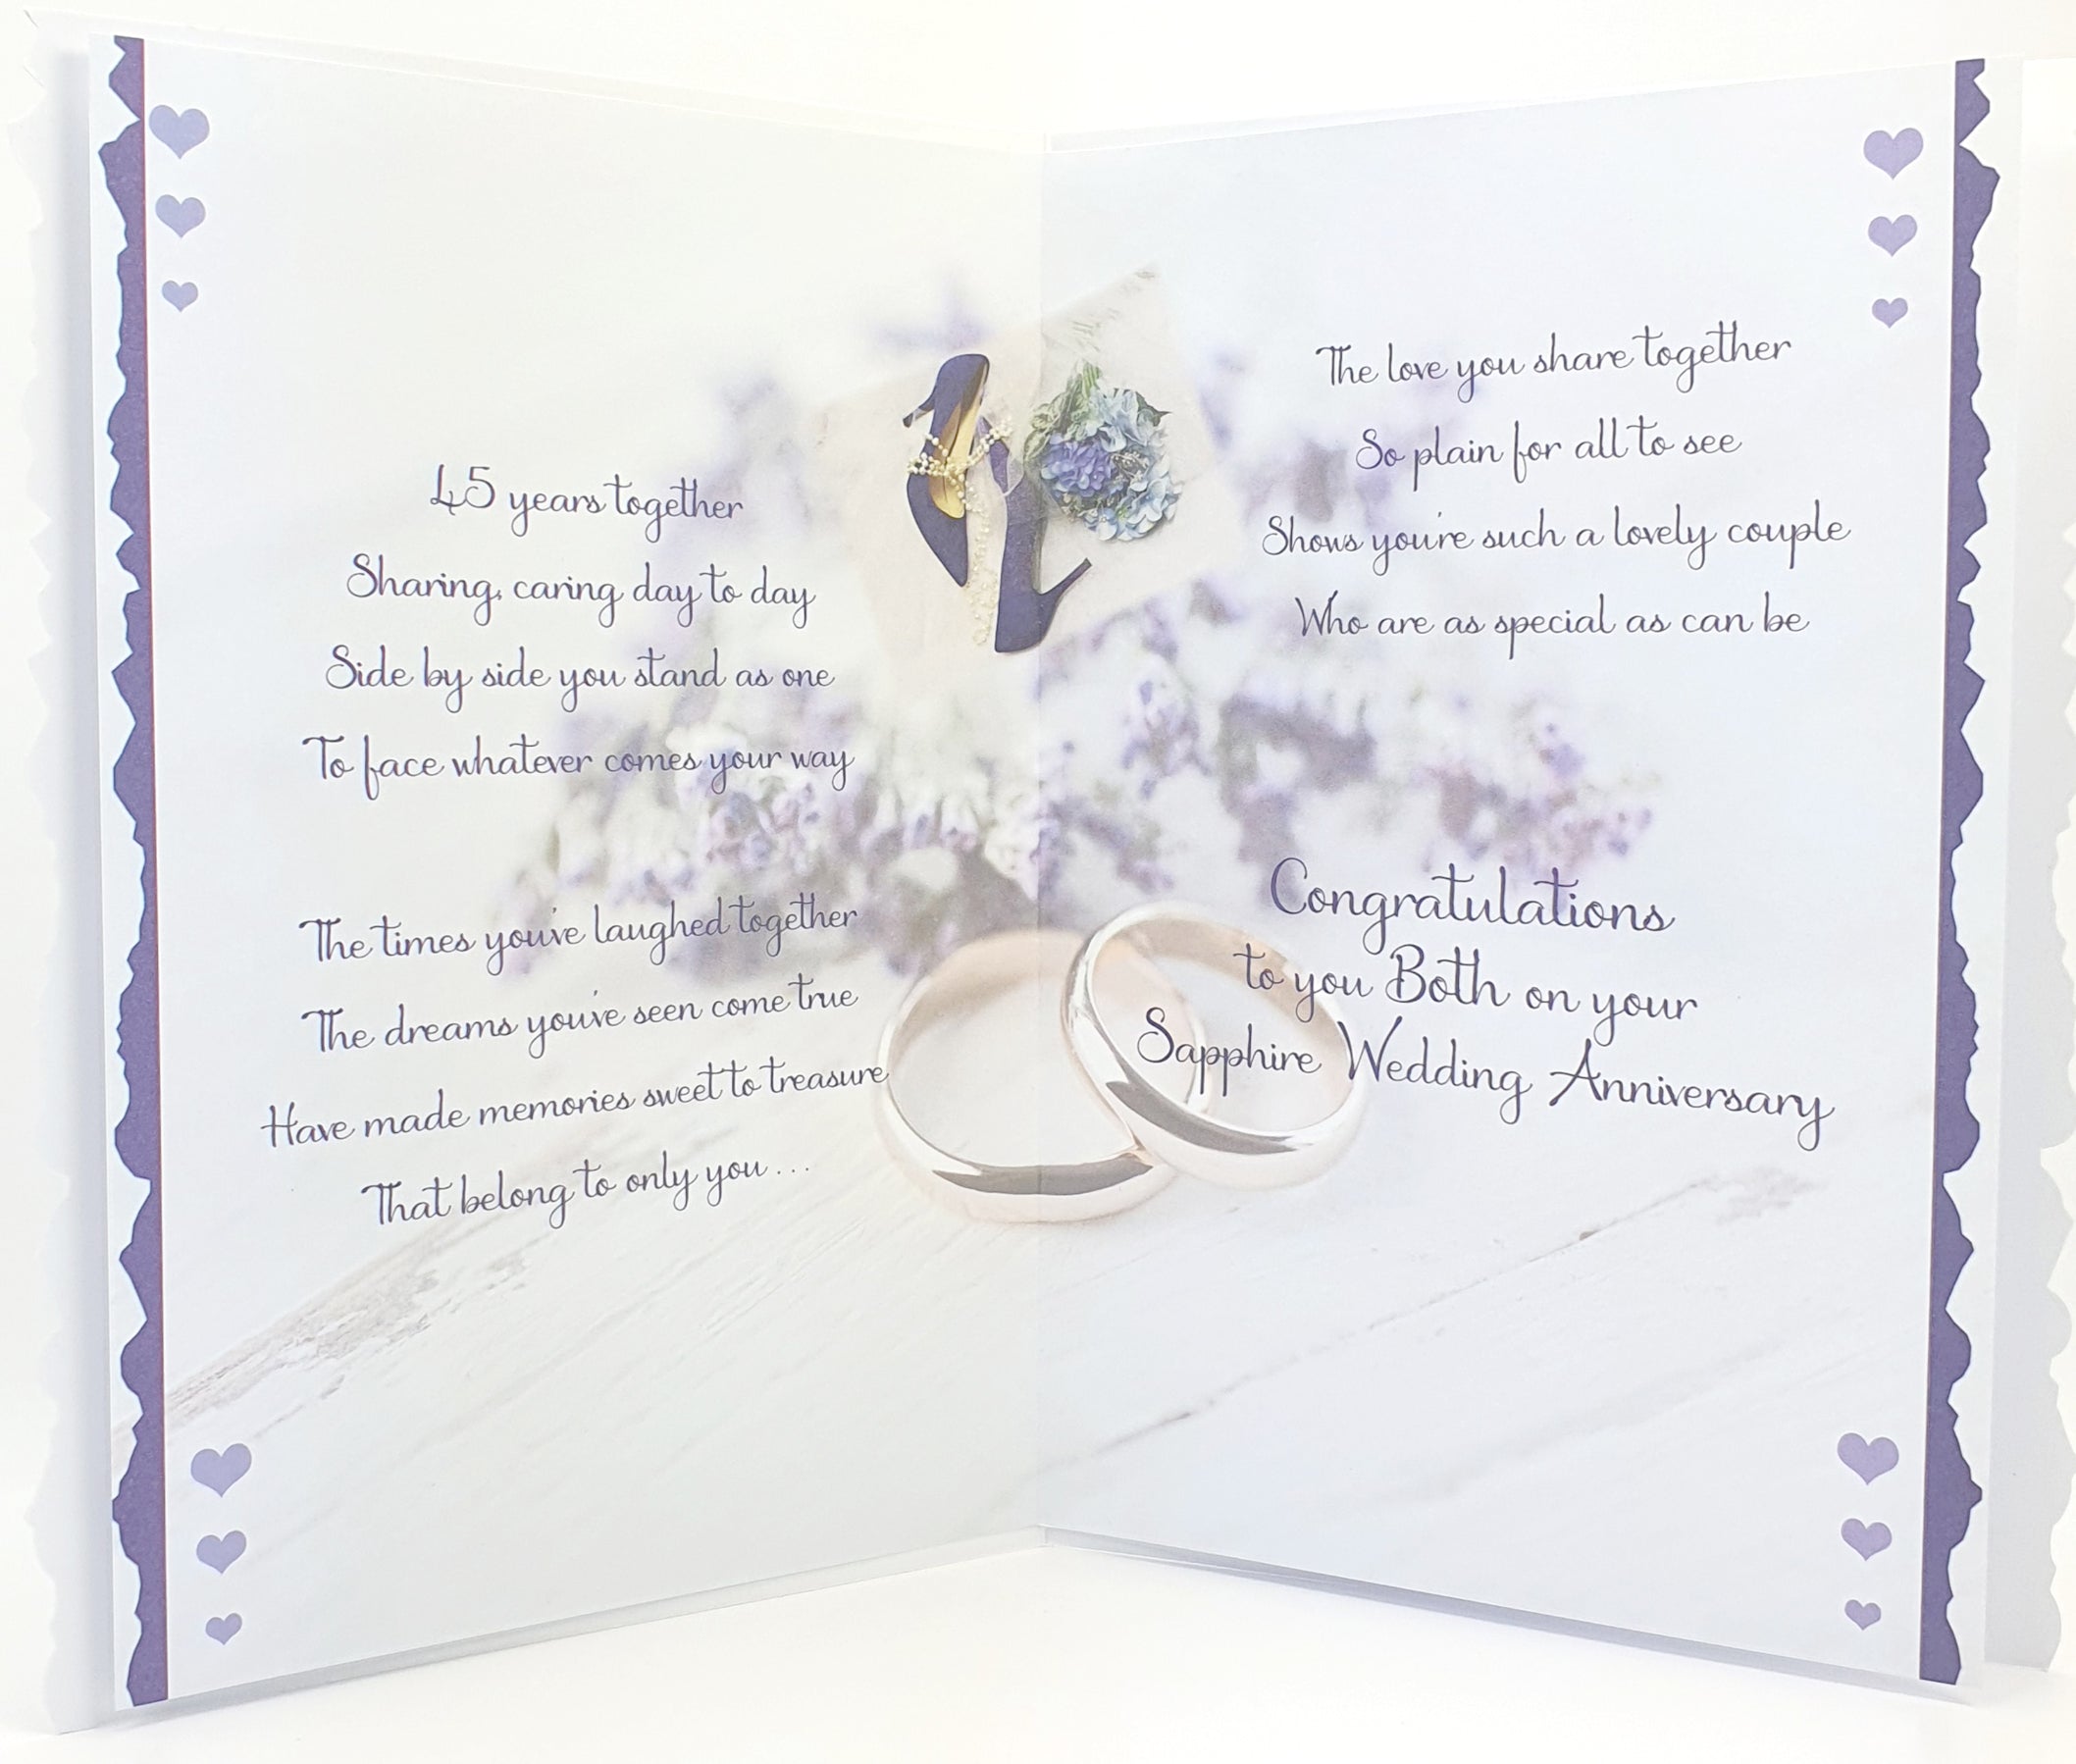 45th Wedding Anniversary Card - Rings, Shose